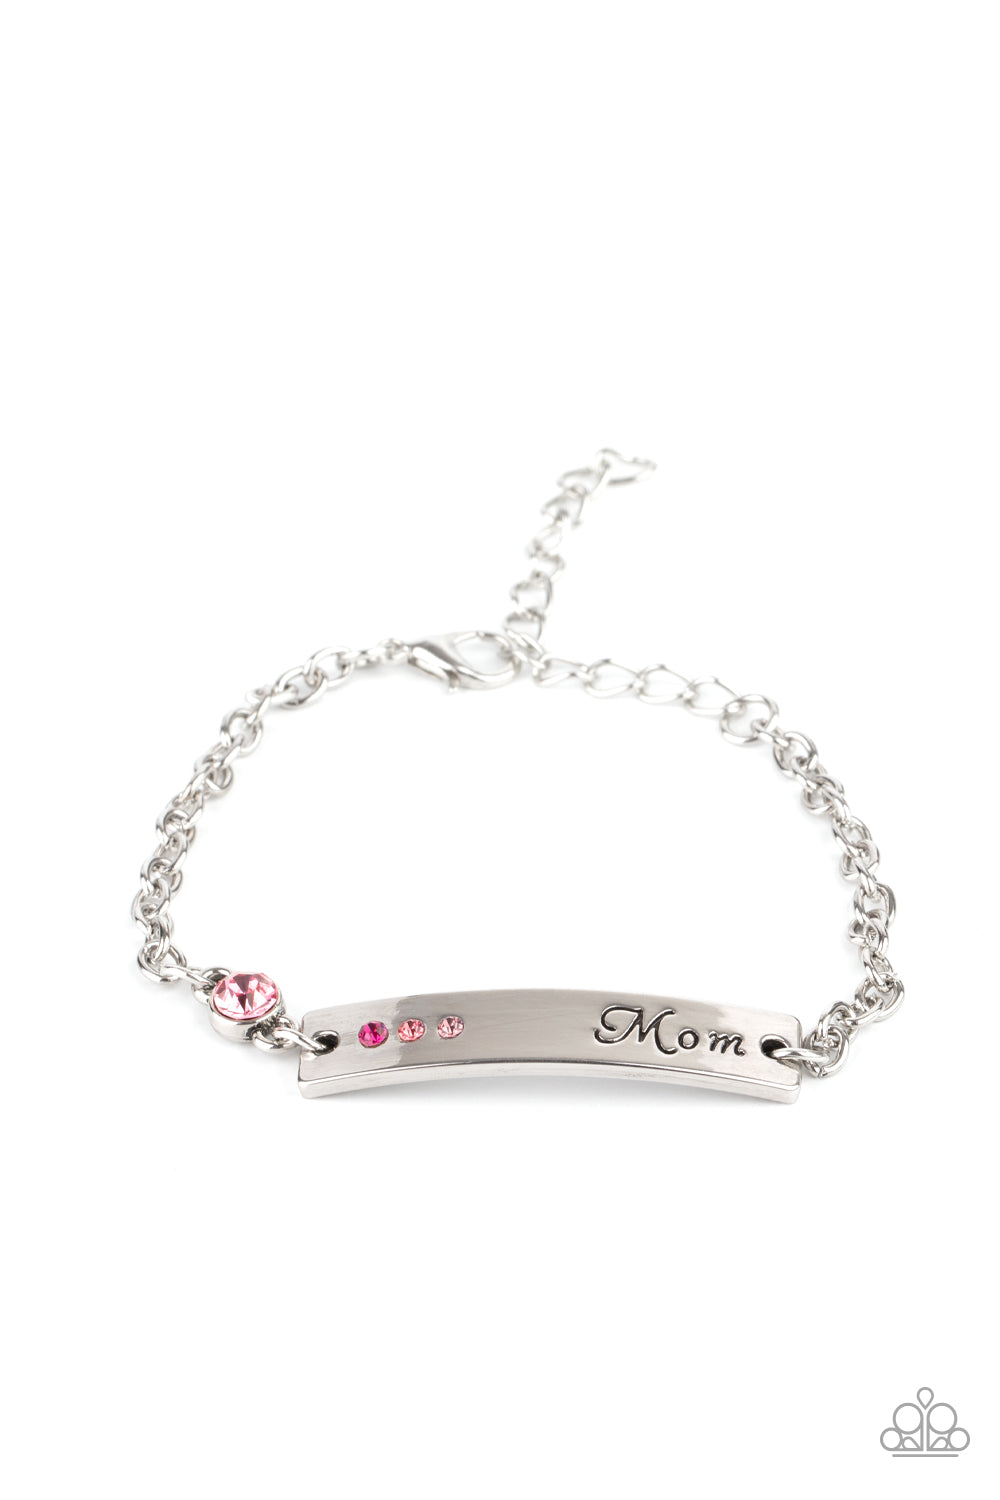 Mom Always Knows - Pink bracelet 651